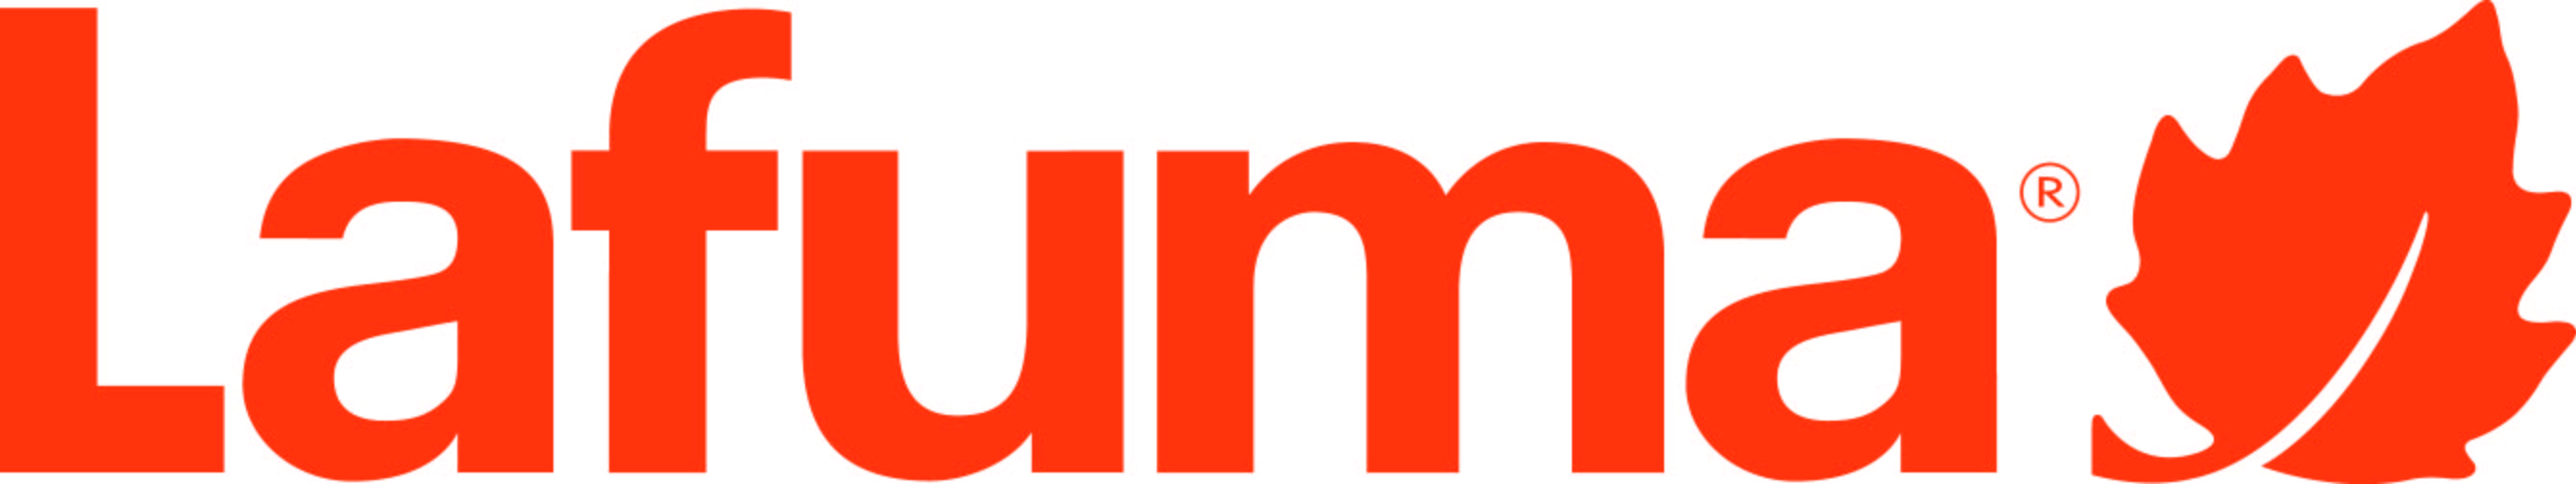 Lafuma master orange logo 2012